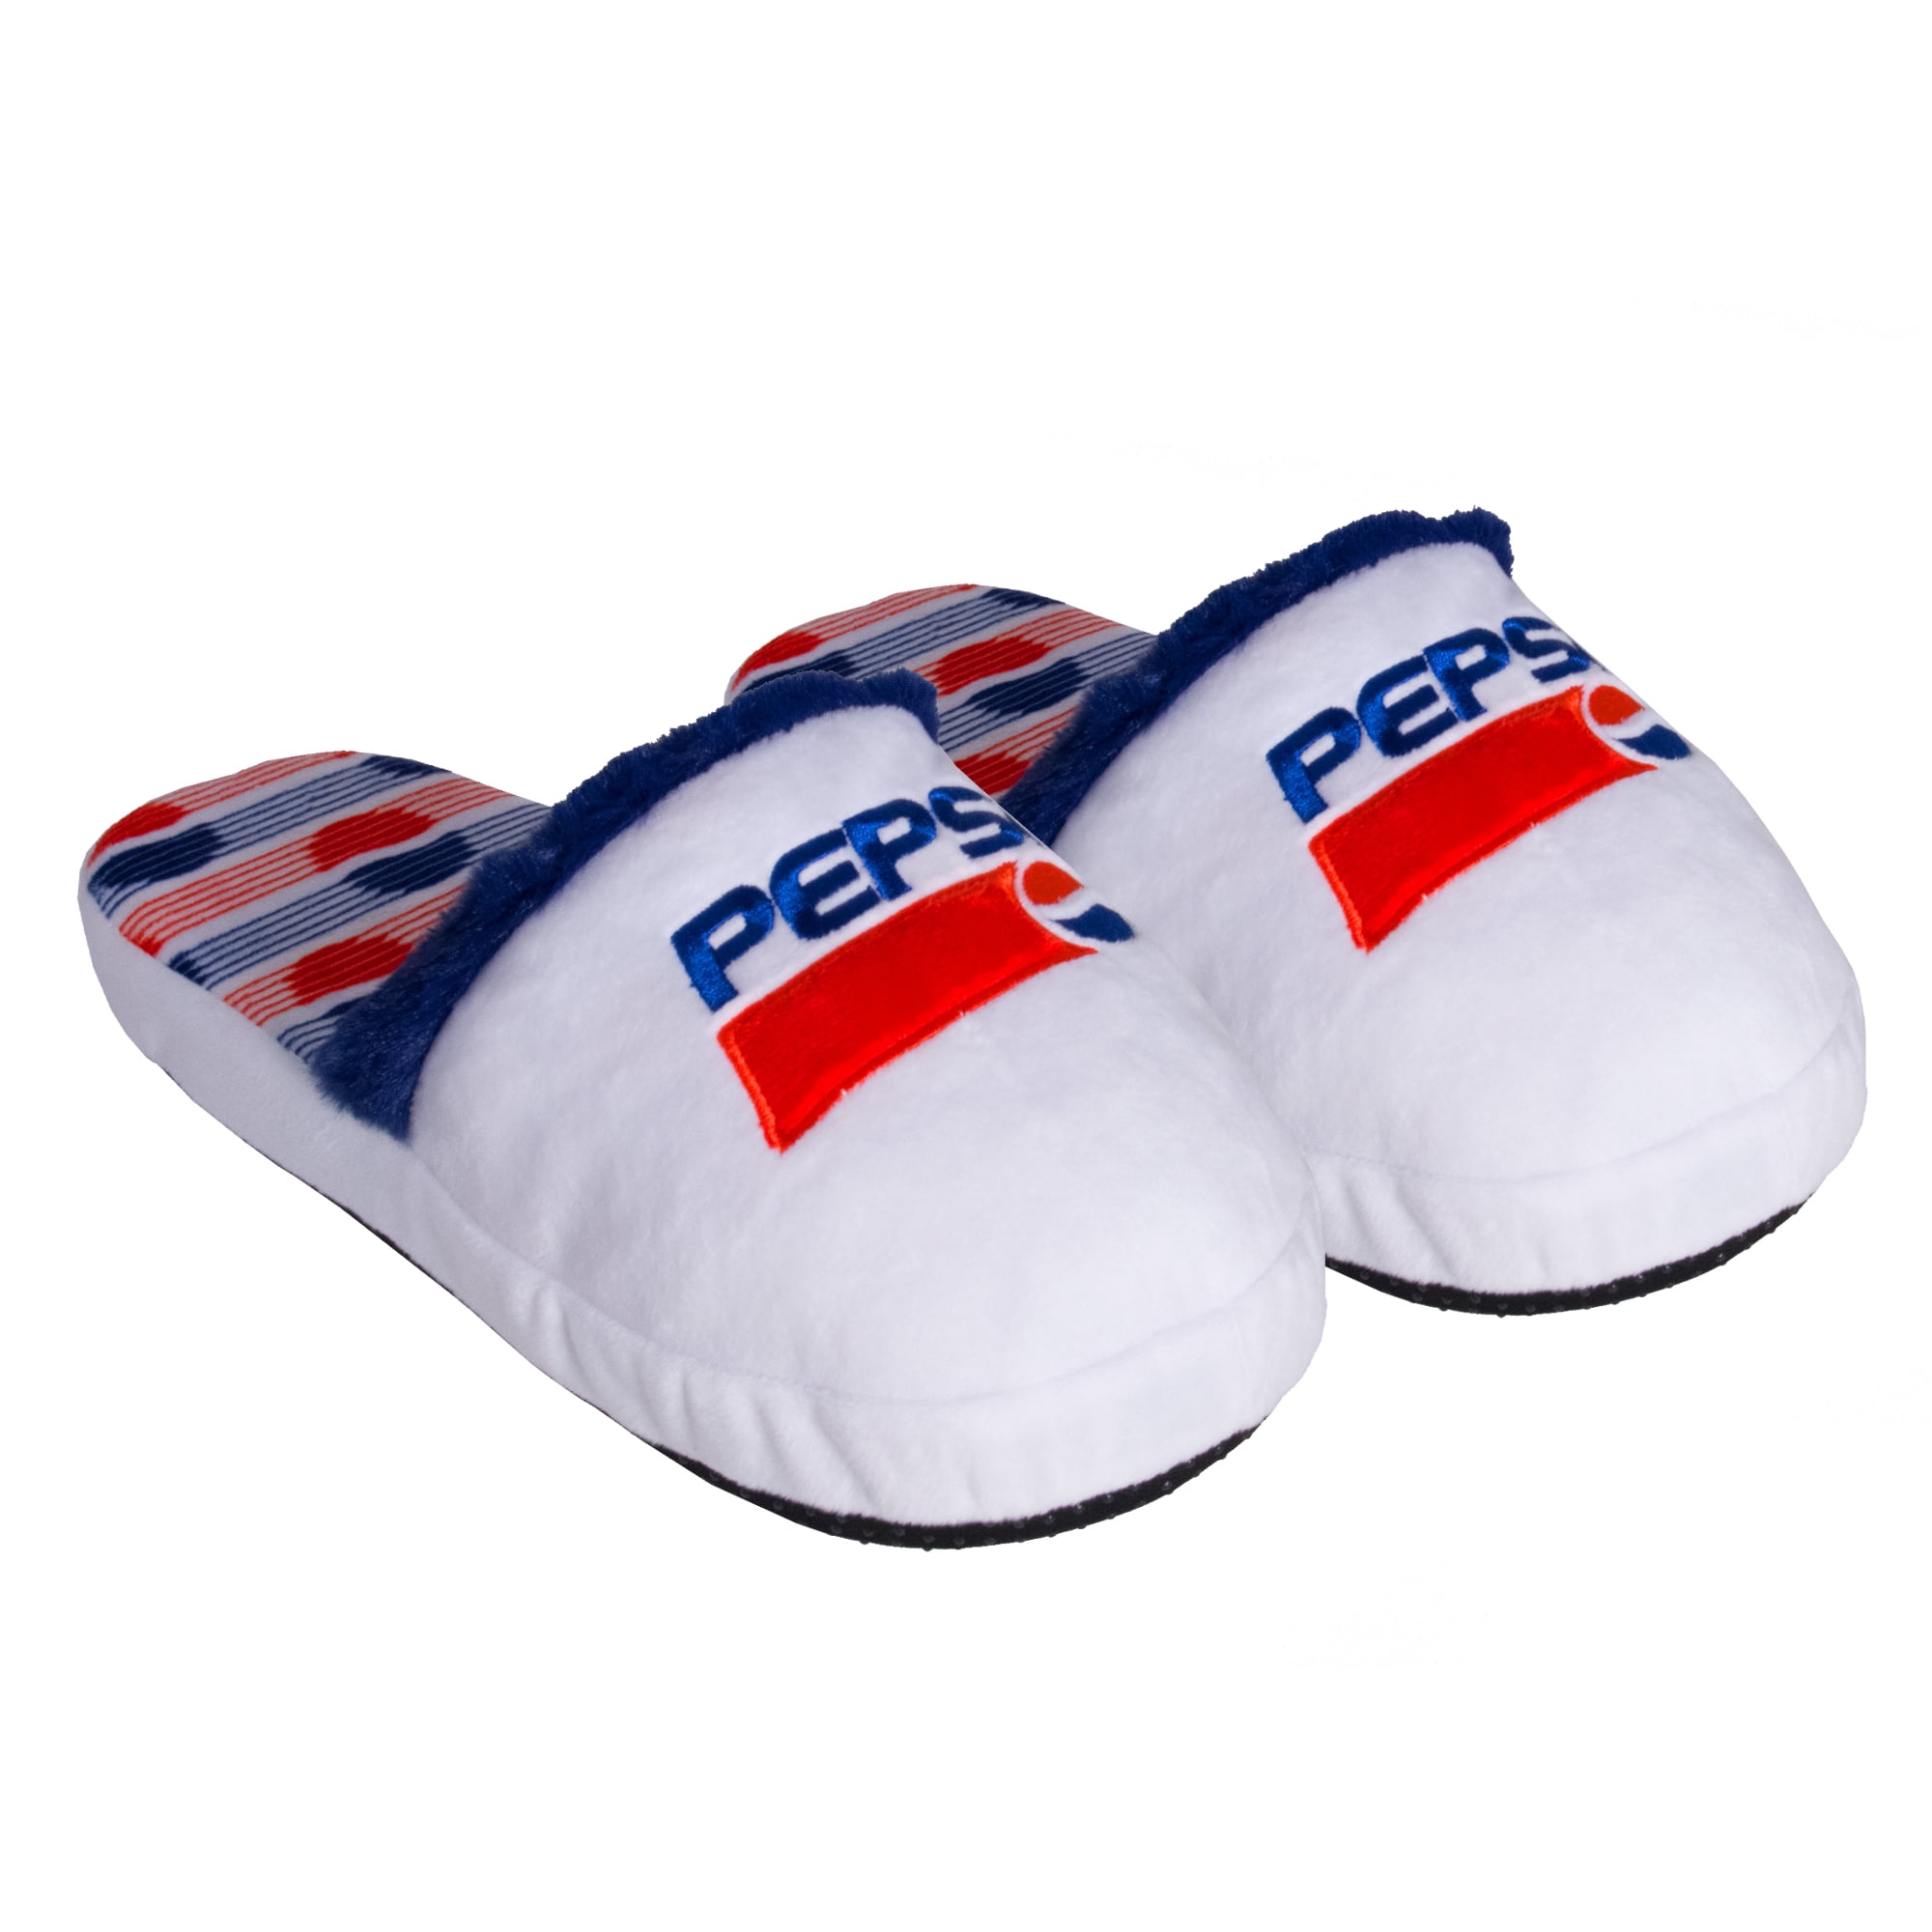 Odd Sox, Pepsi Cool, Fun Novelty Slippers -